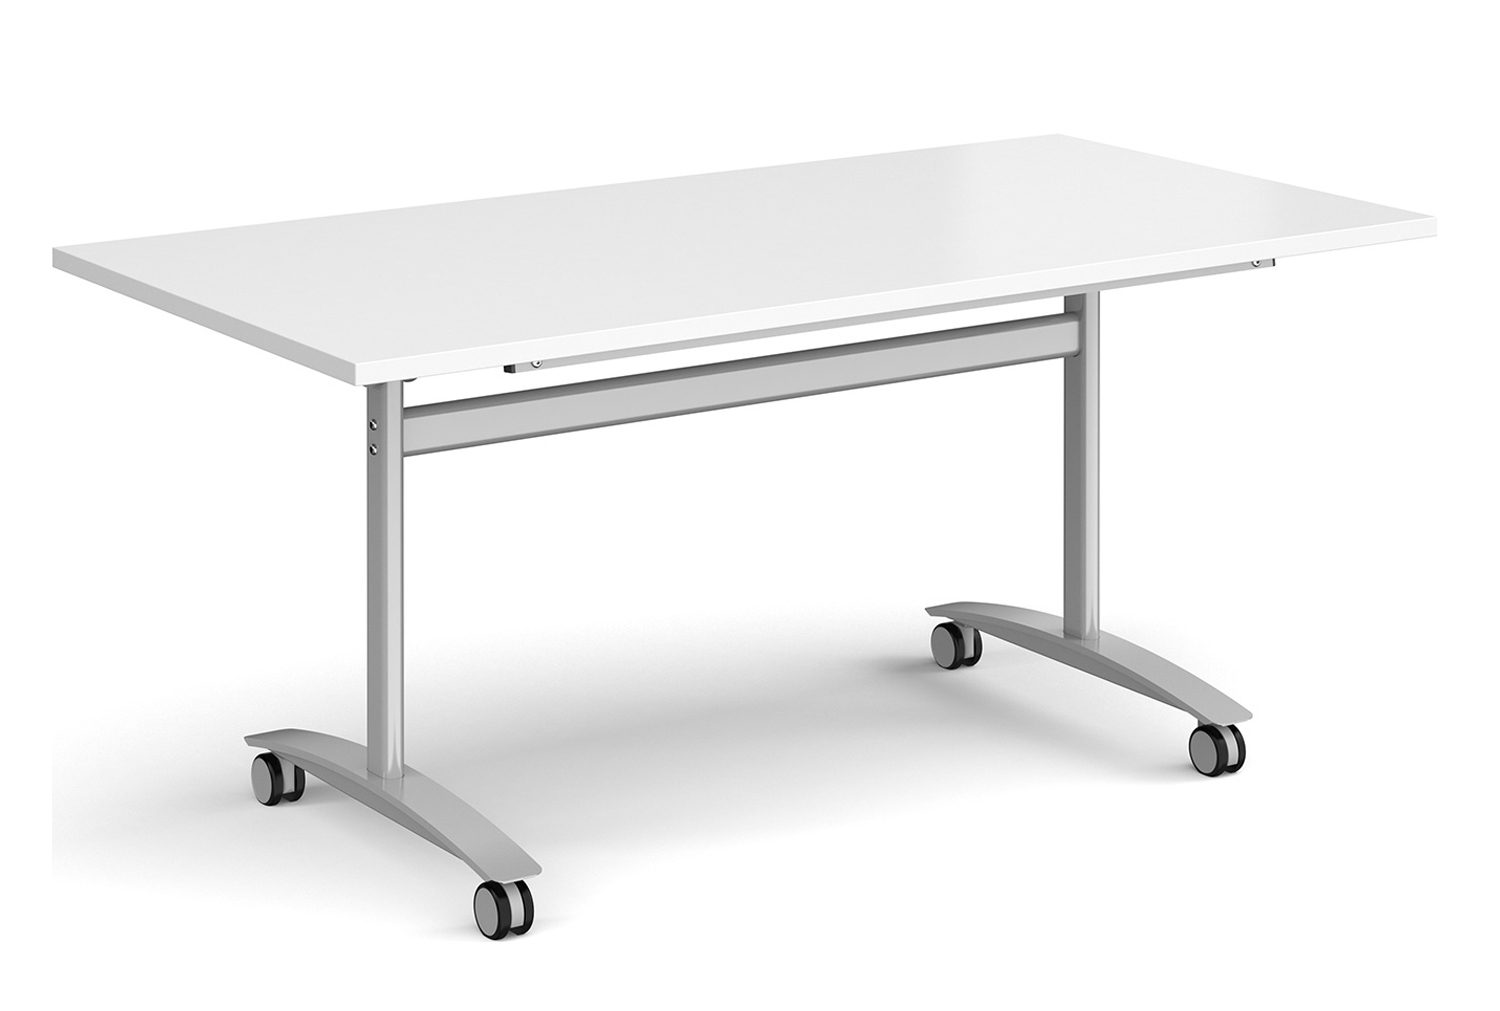 Carousel Rectangular Flip Top Meeting Tables, 160wx80dx73h (cm), Silver Frame, White